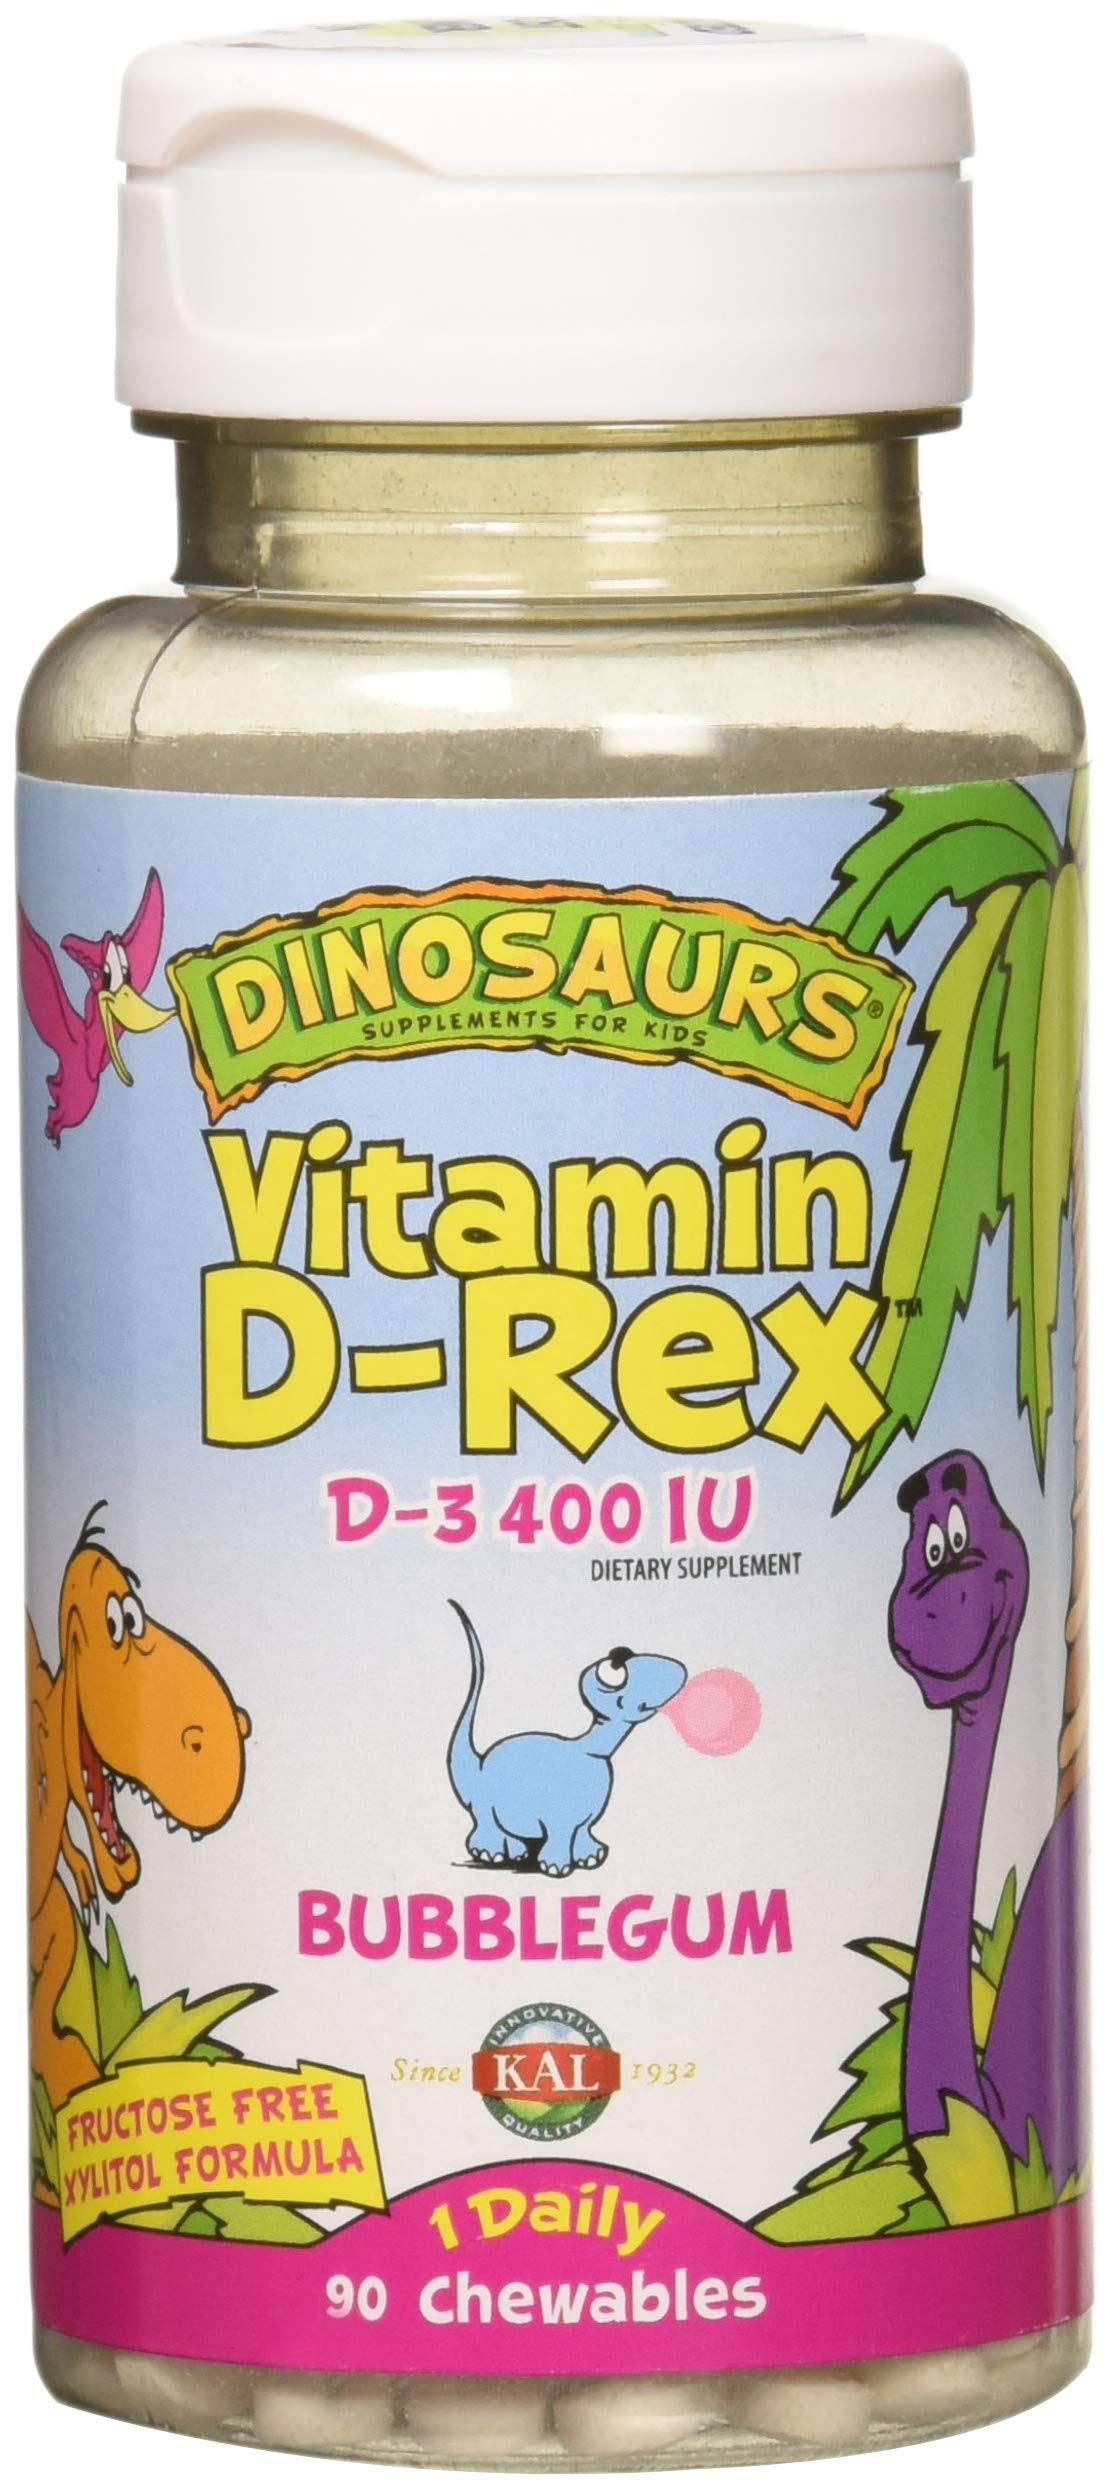 Kal Dinosaurs Vitamin D Rex D3 400 IU Supplement - 90 Chewables, Bubblegum